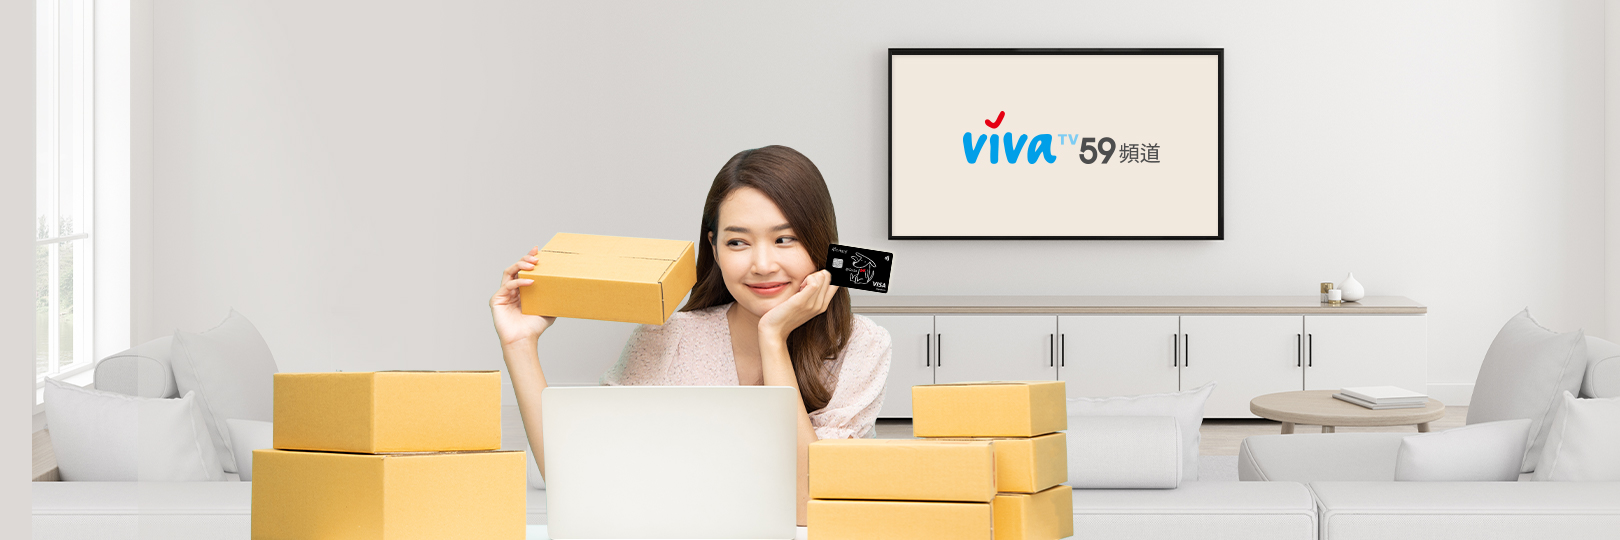 快到ViVa TV購物